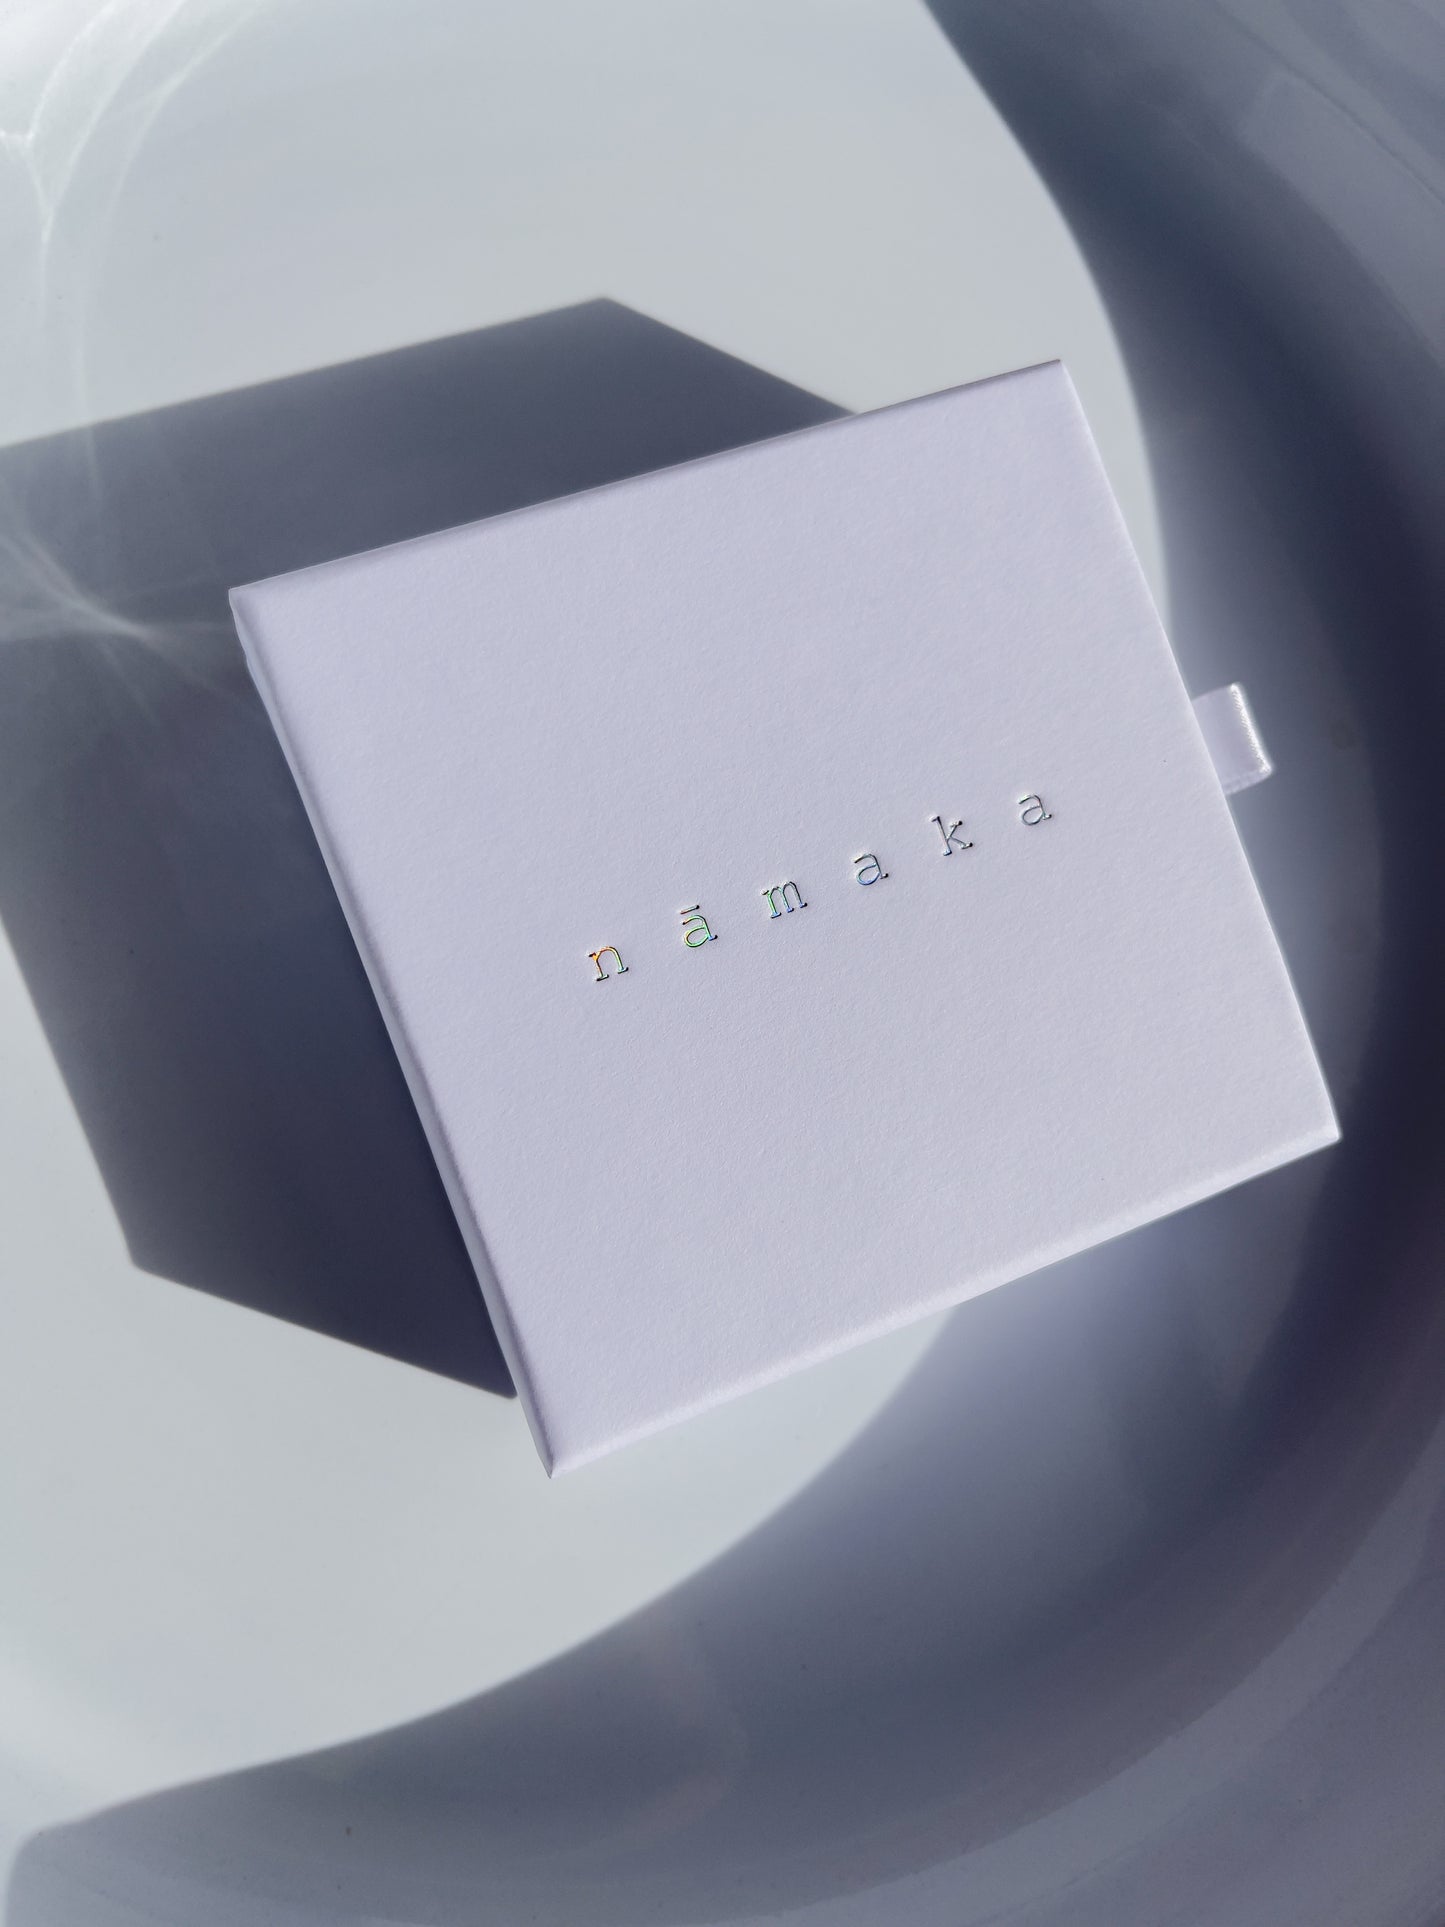 packaging design made by nāmaka